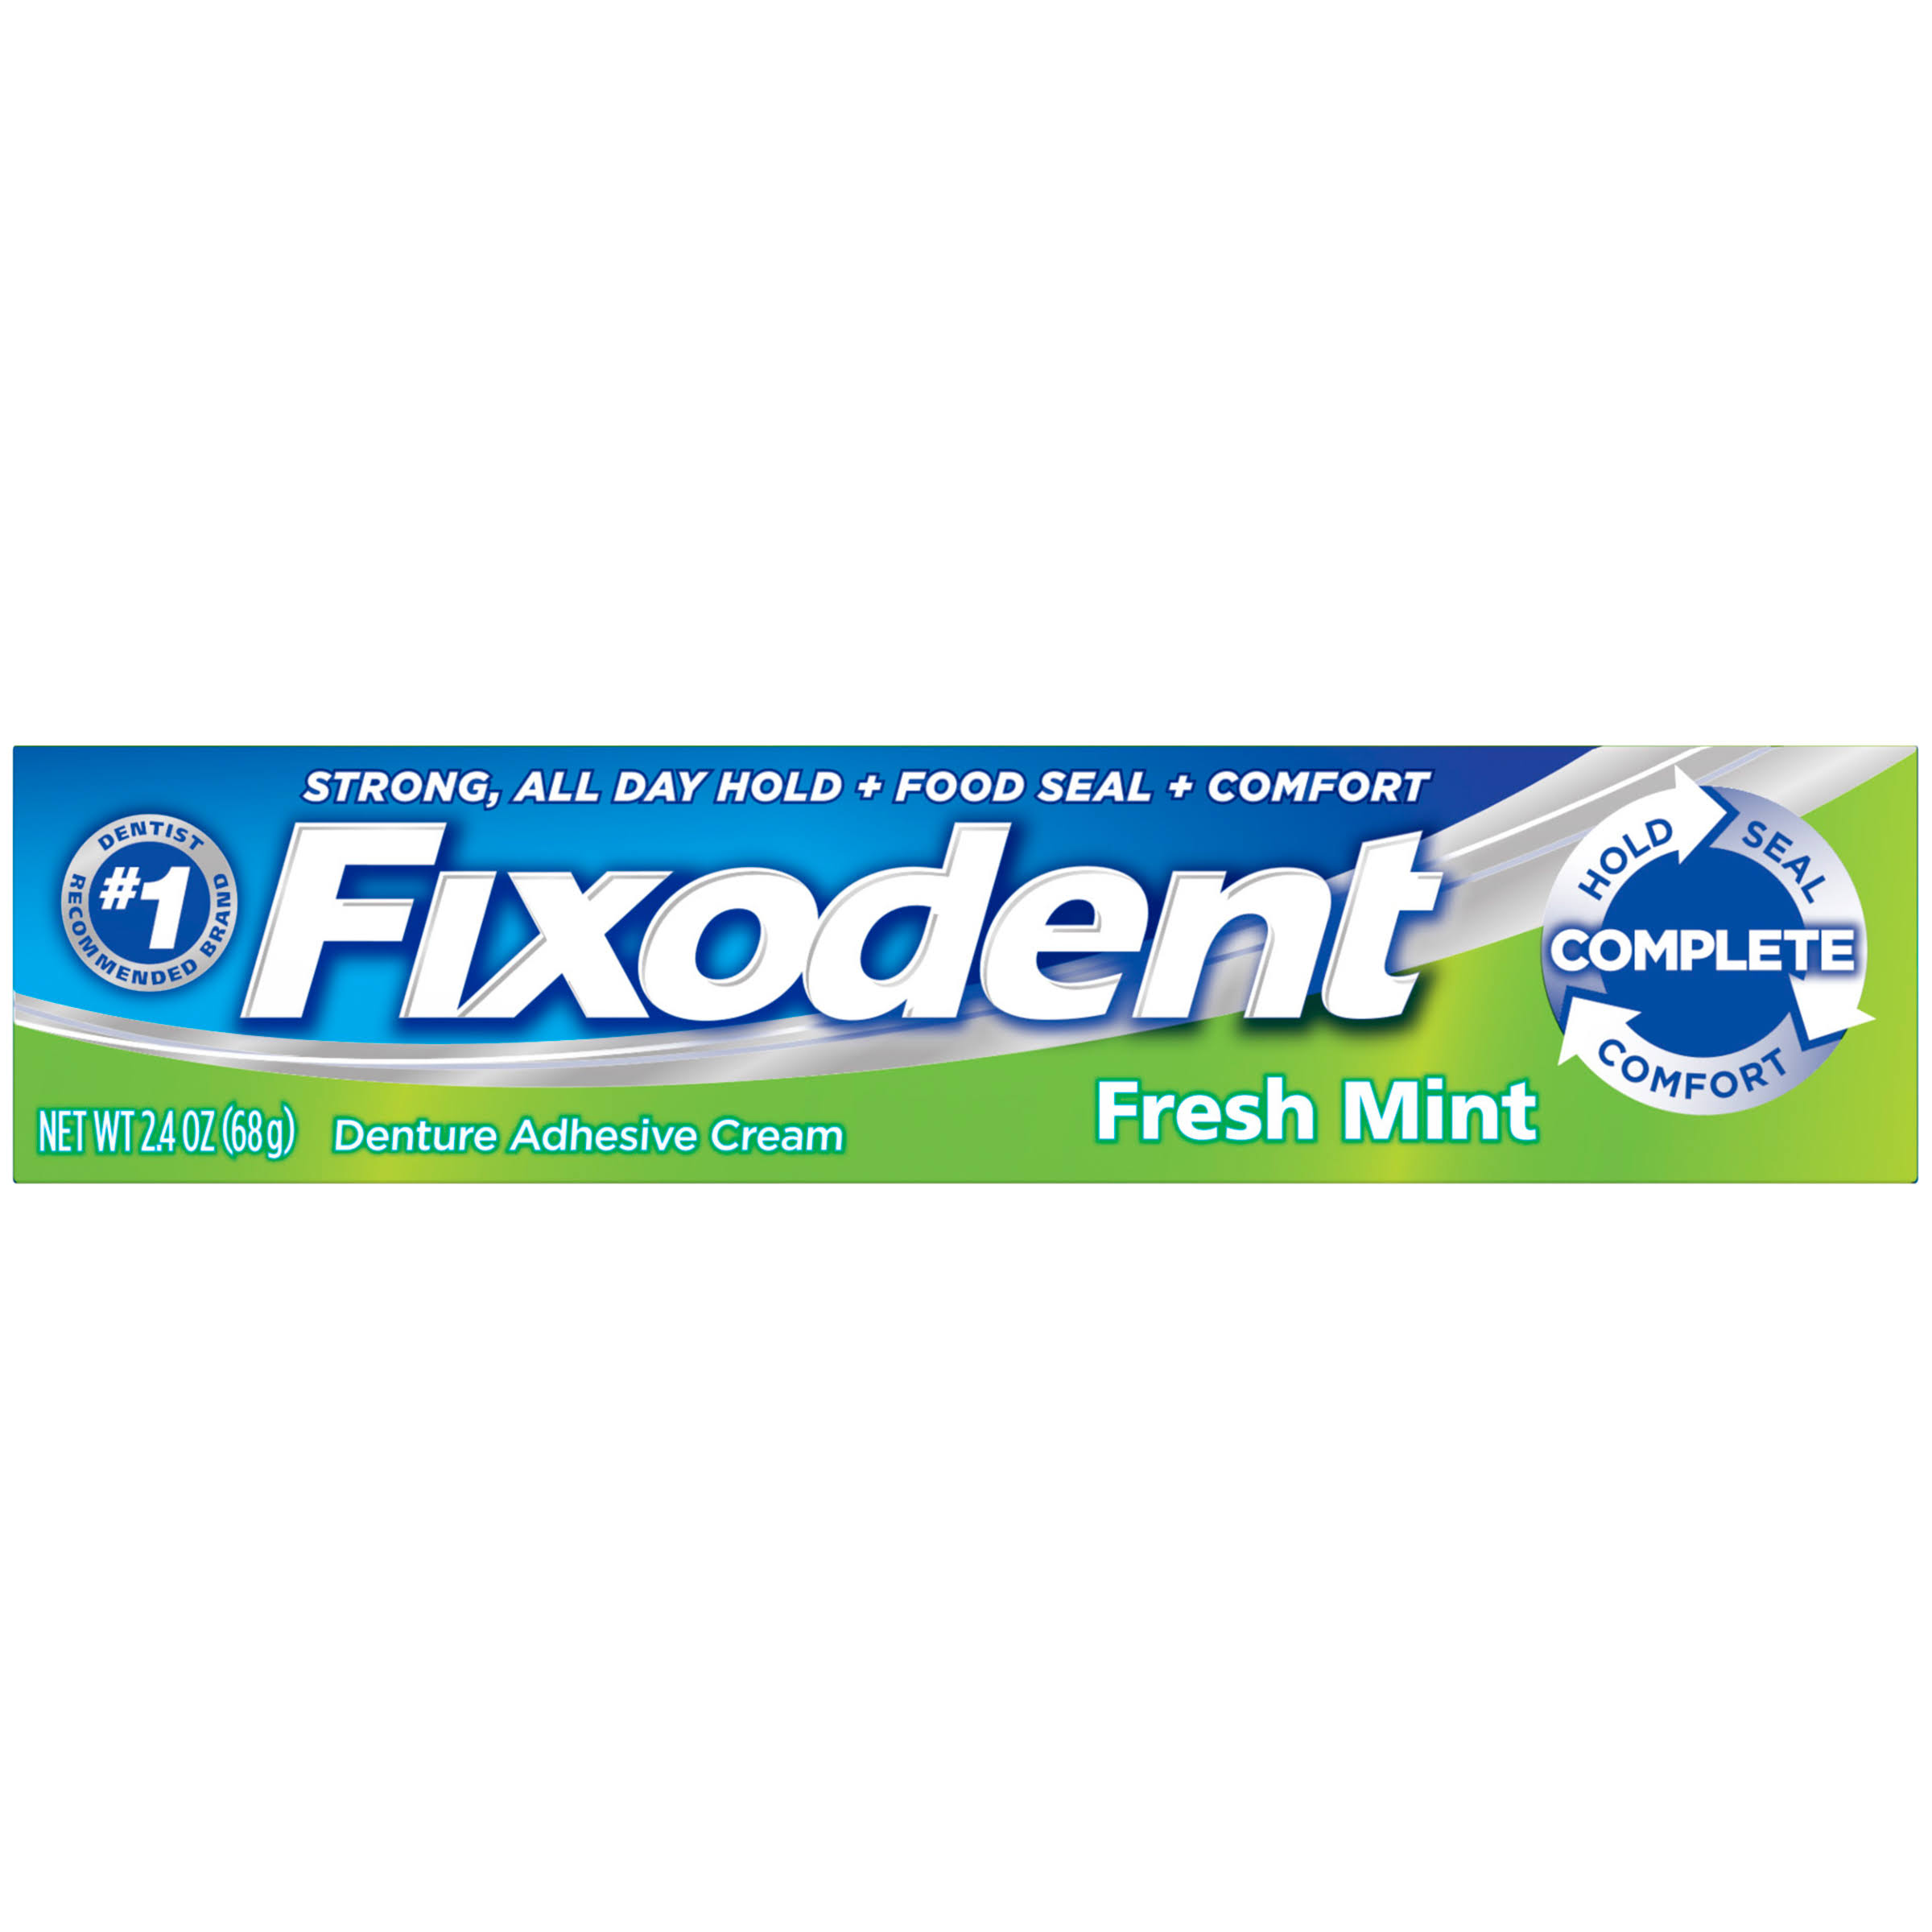 Fixodent Fresh Mint Denture Adhesive Cream - 2.4oz